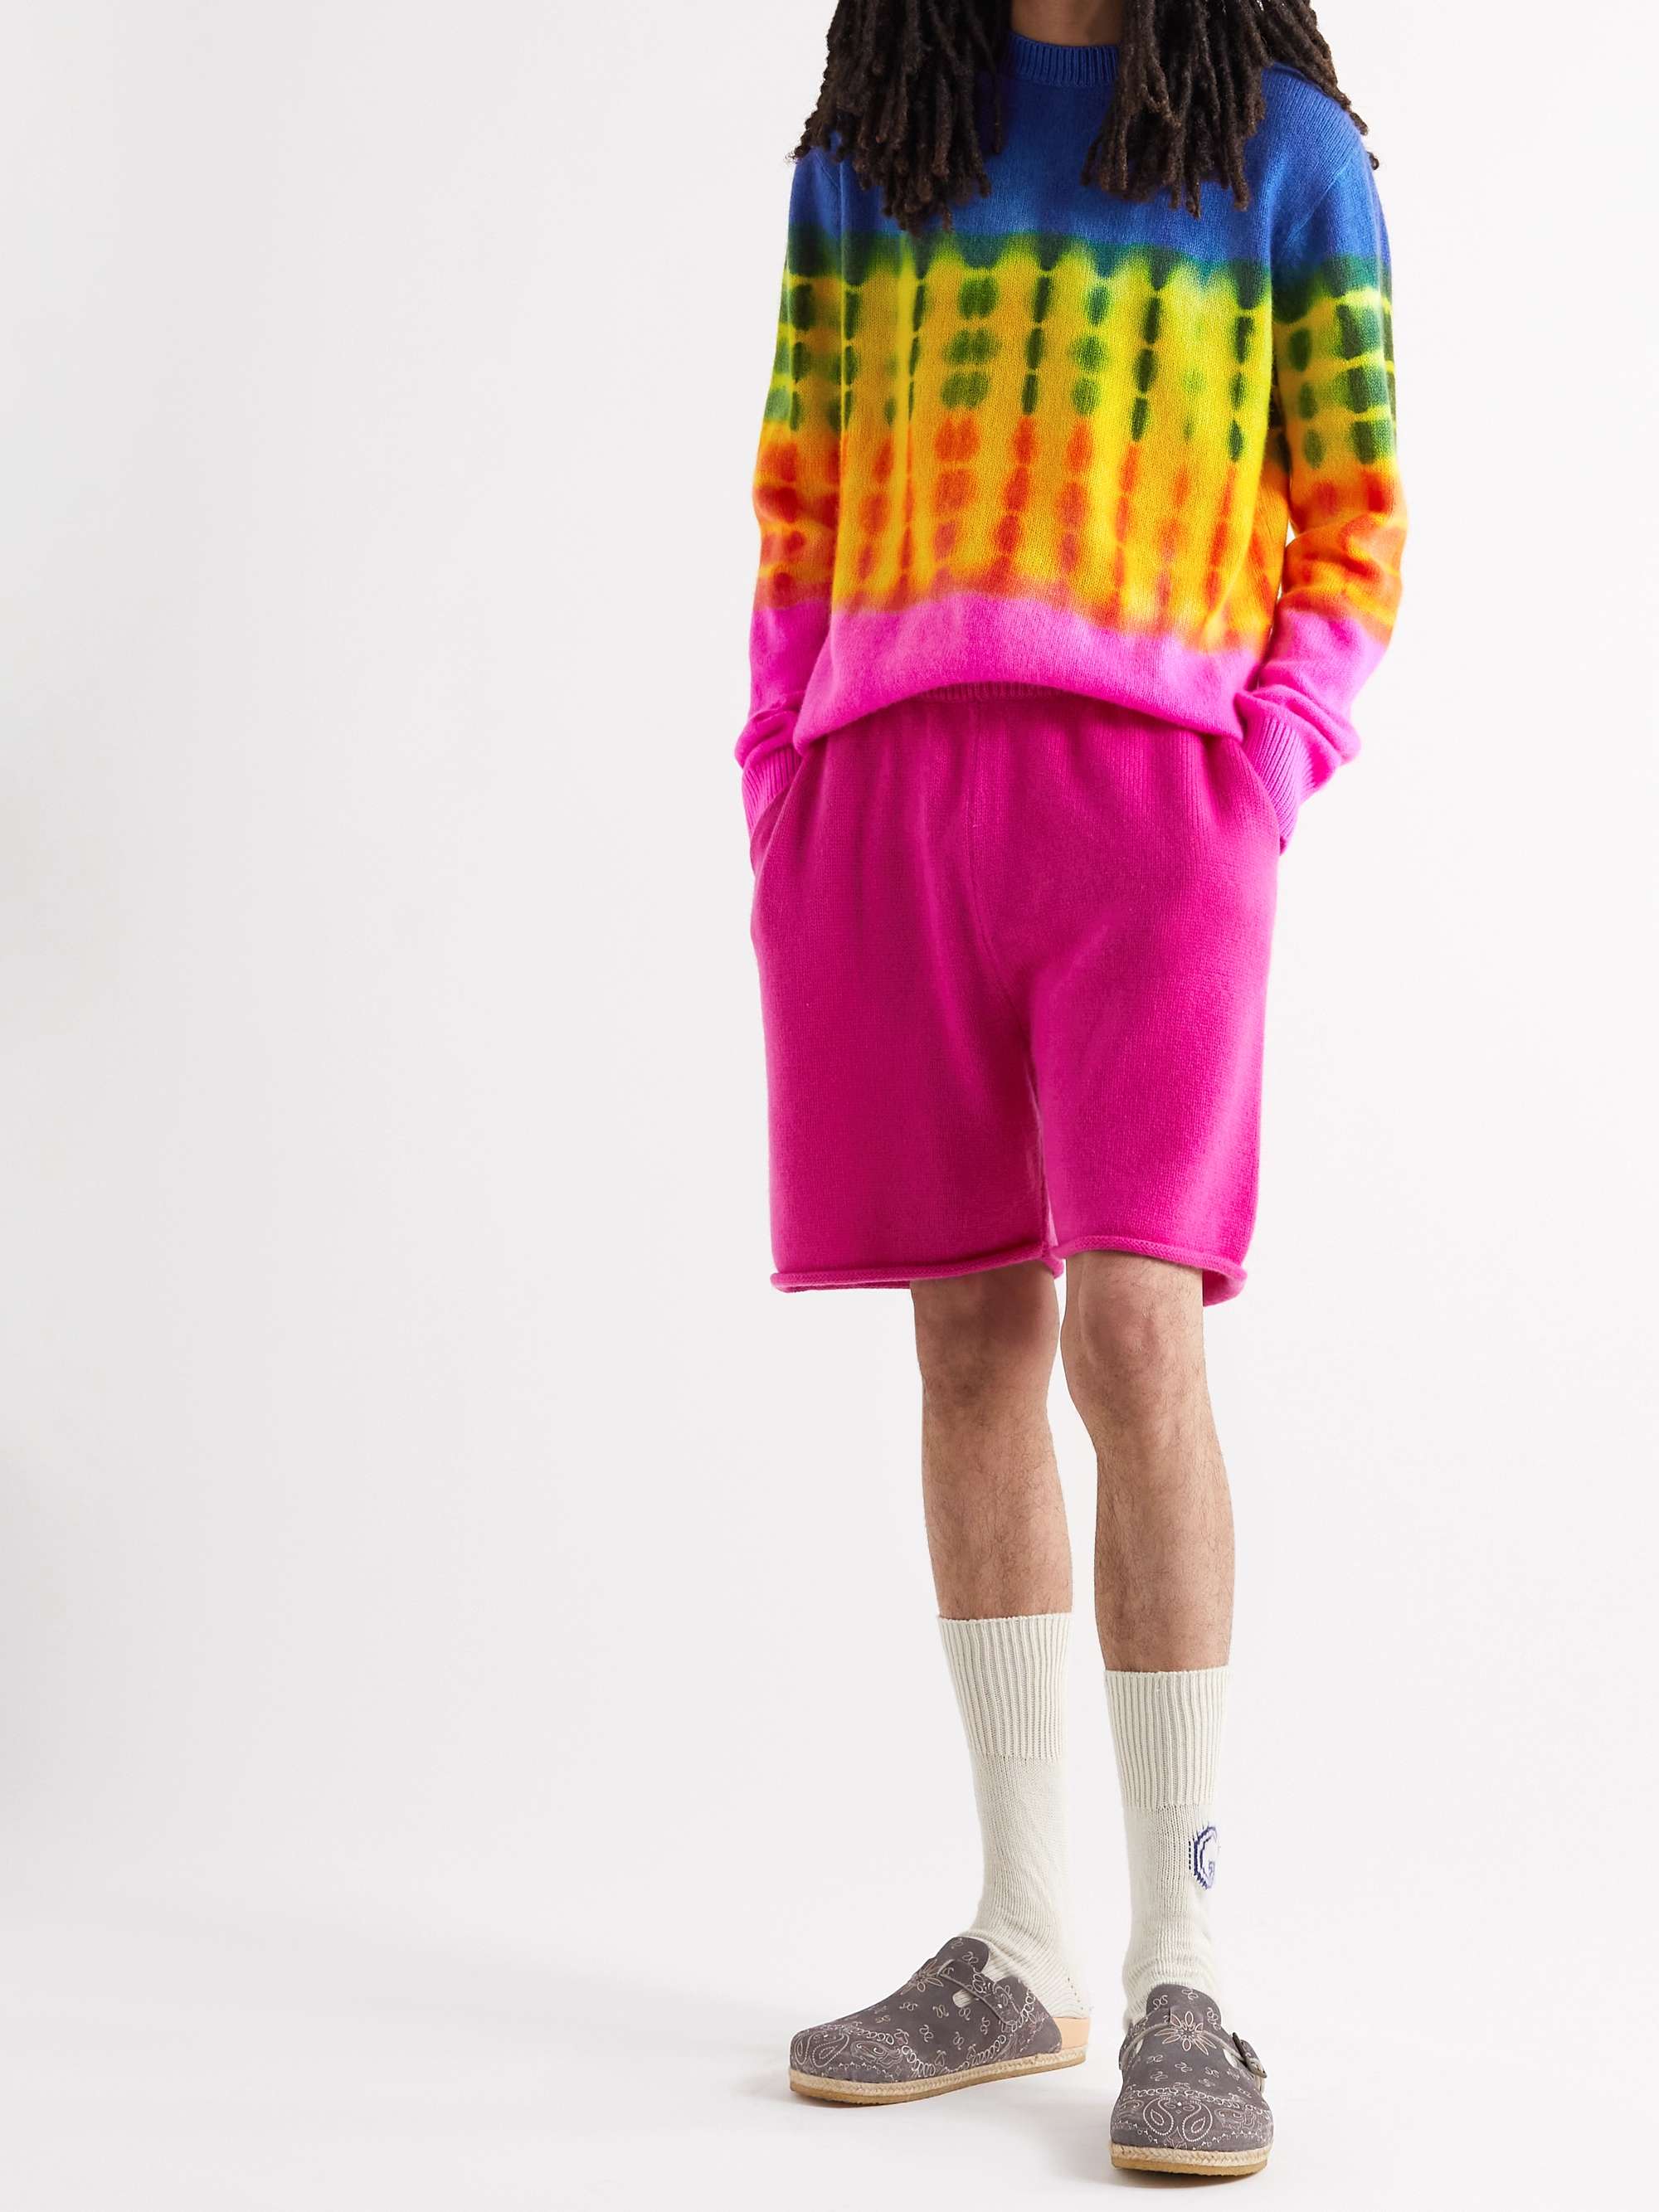 THE ELDER STATESMAN Tie-Dyed Cashmere Sweater